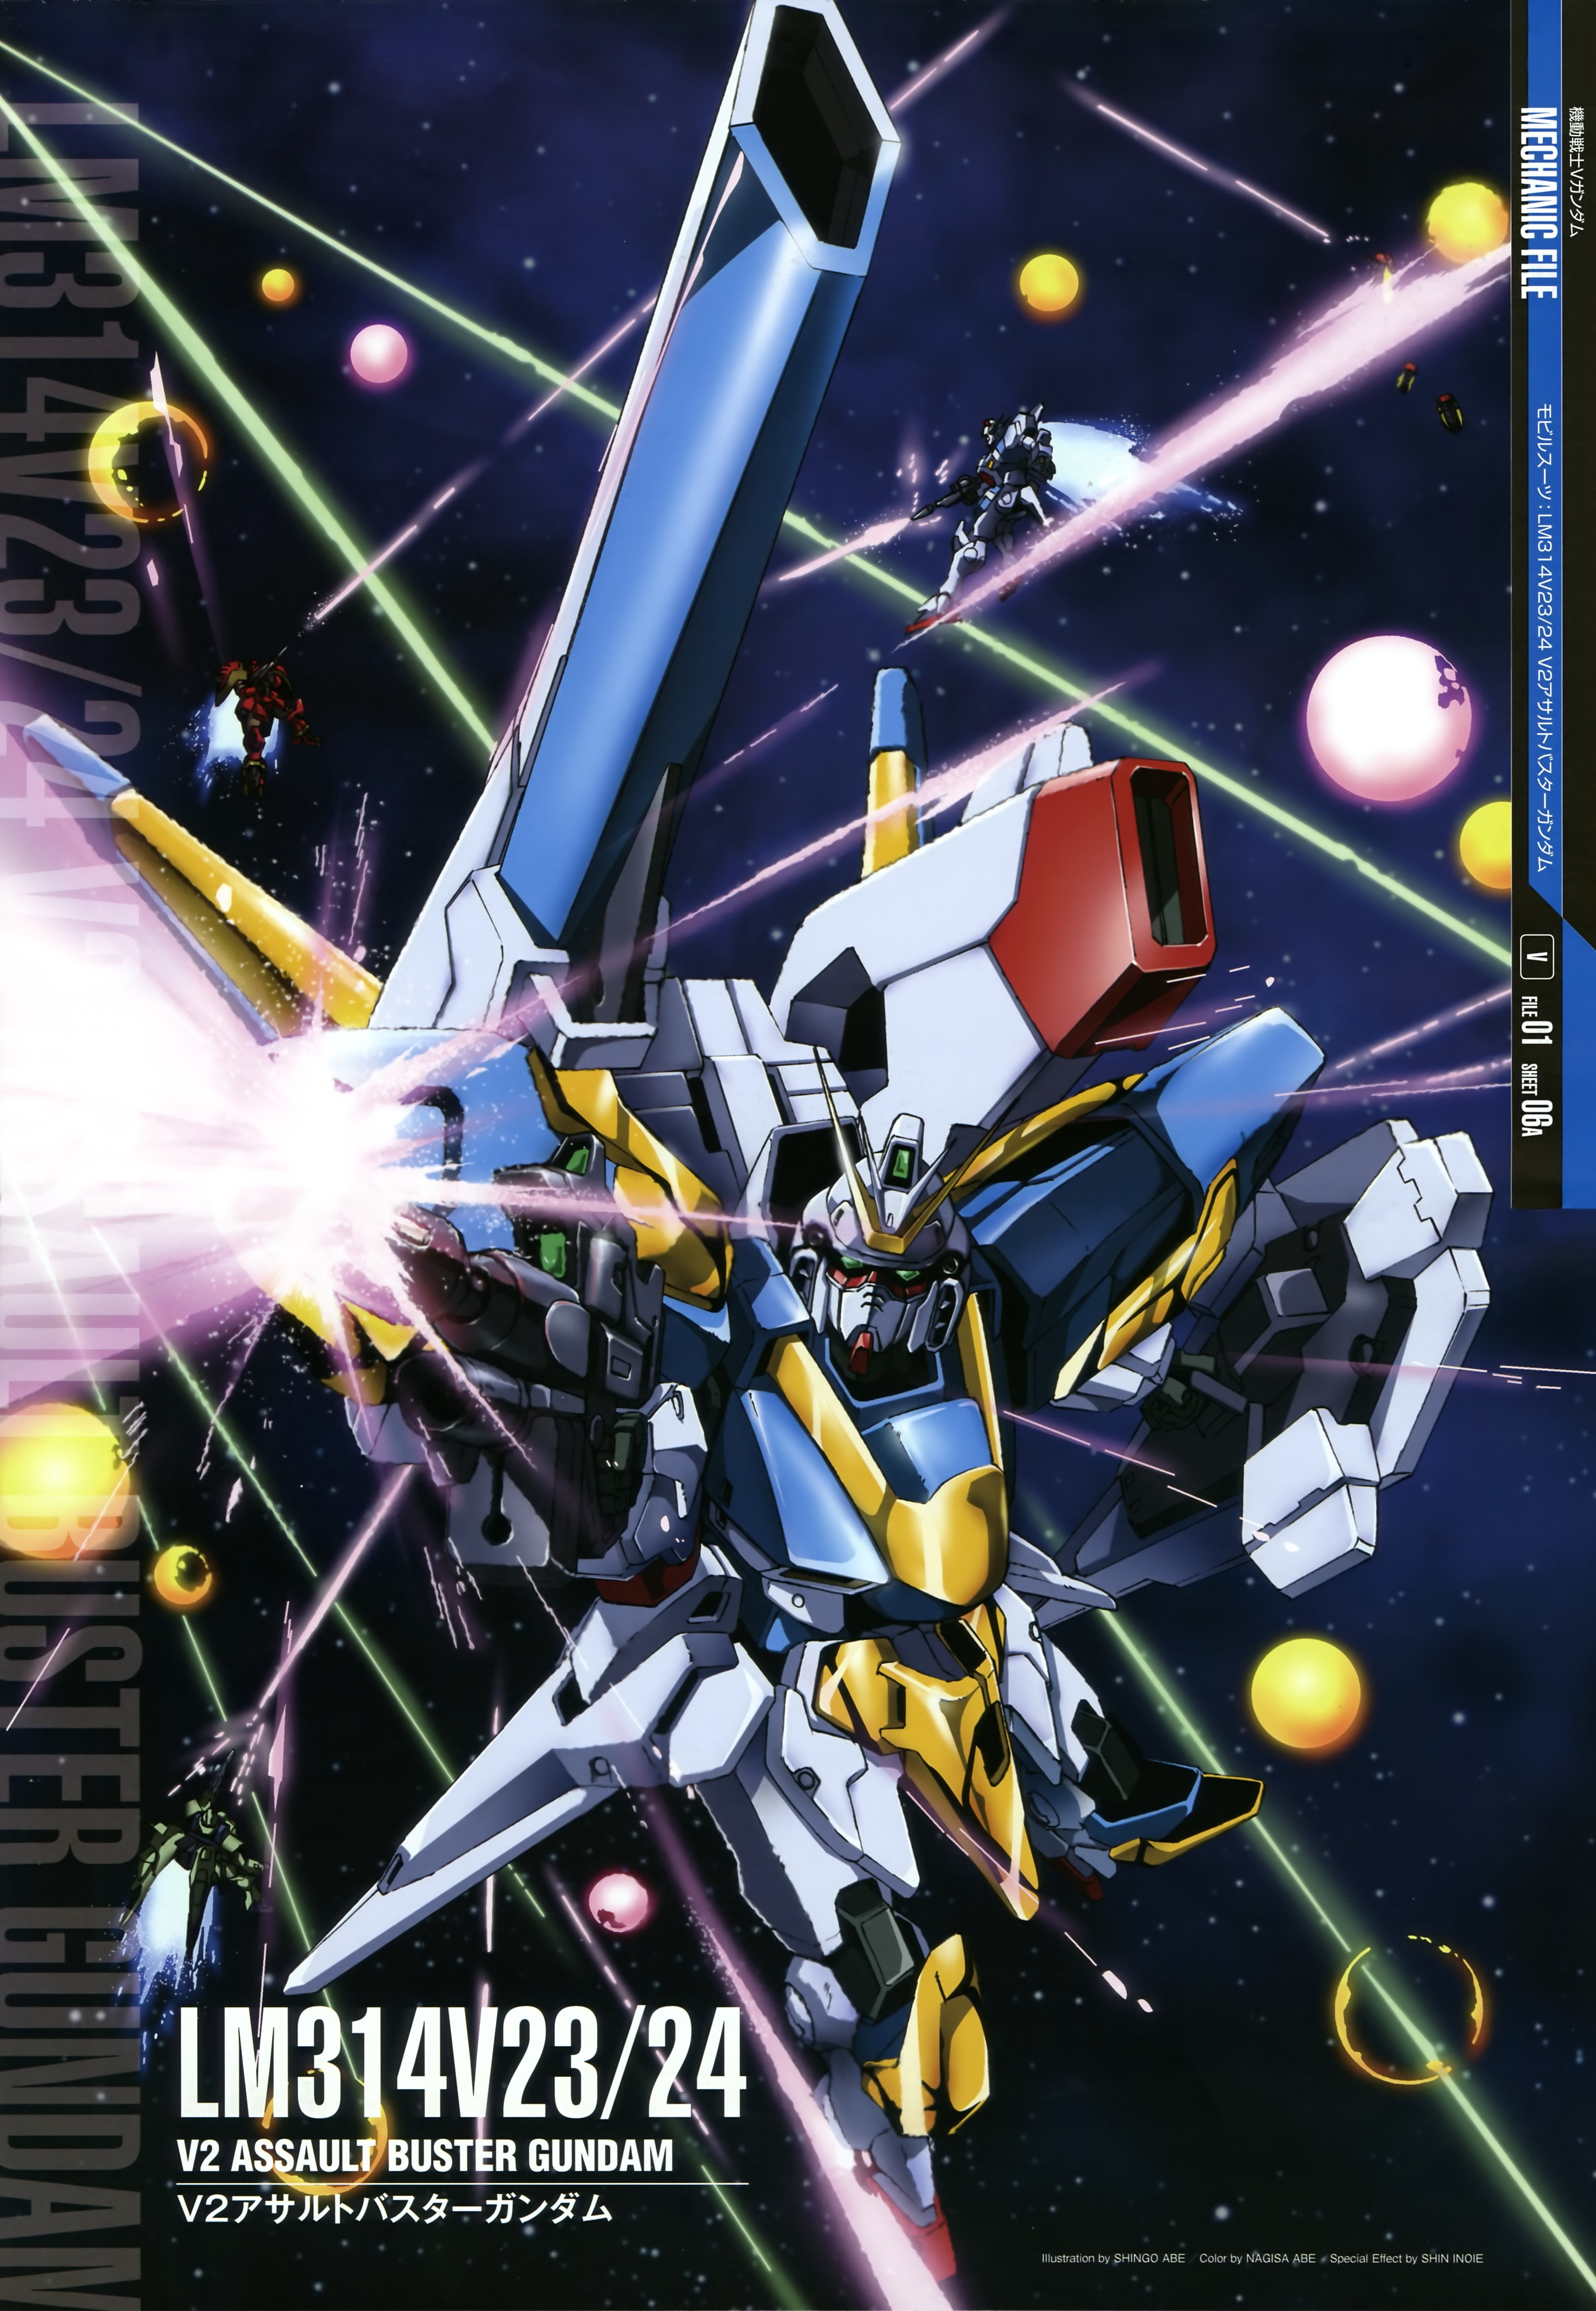 Anime 3925x5682 anime mechs Super Robot Taisen V2 Assault Buster Gundam Mobile Suit V Gundam Gundam artwork digital art fan art